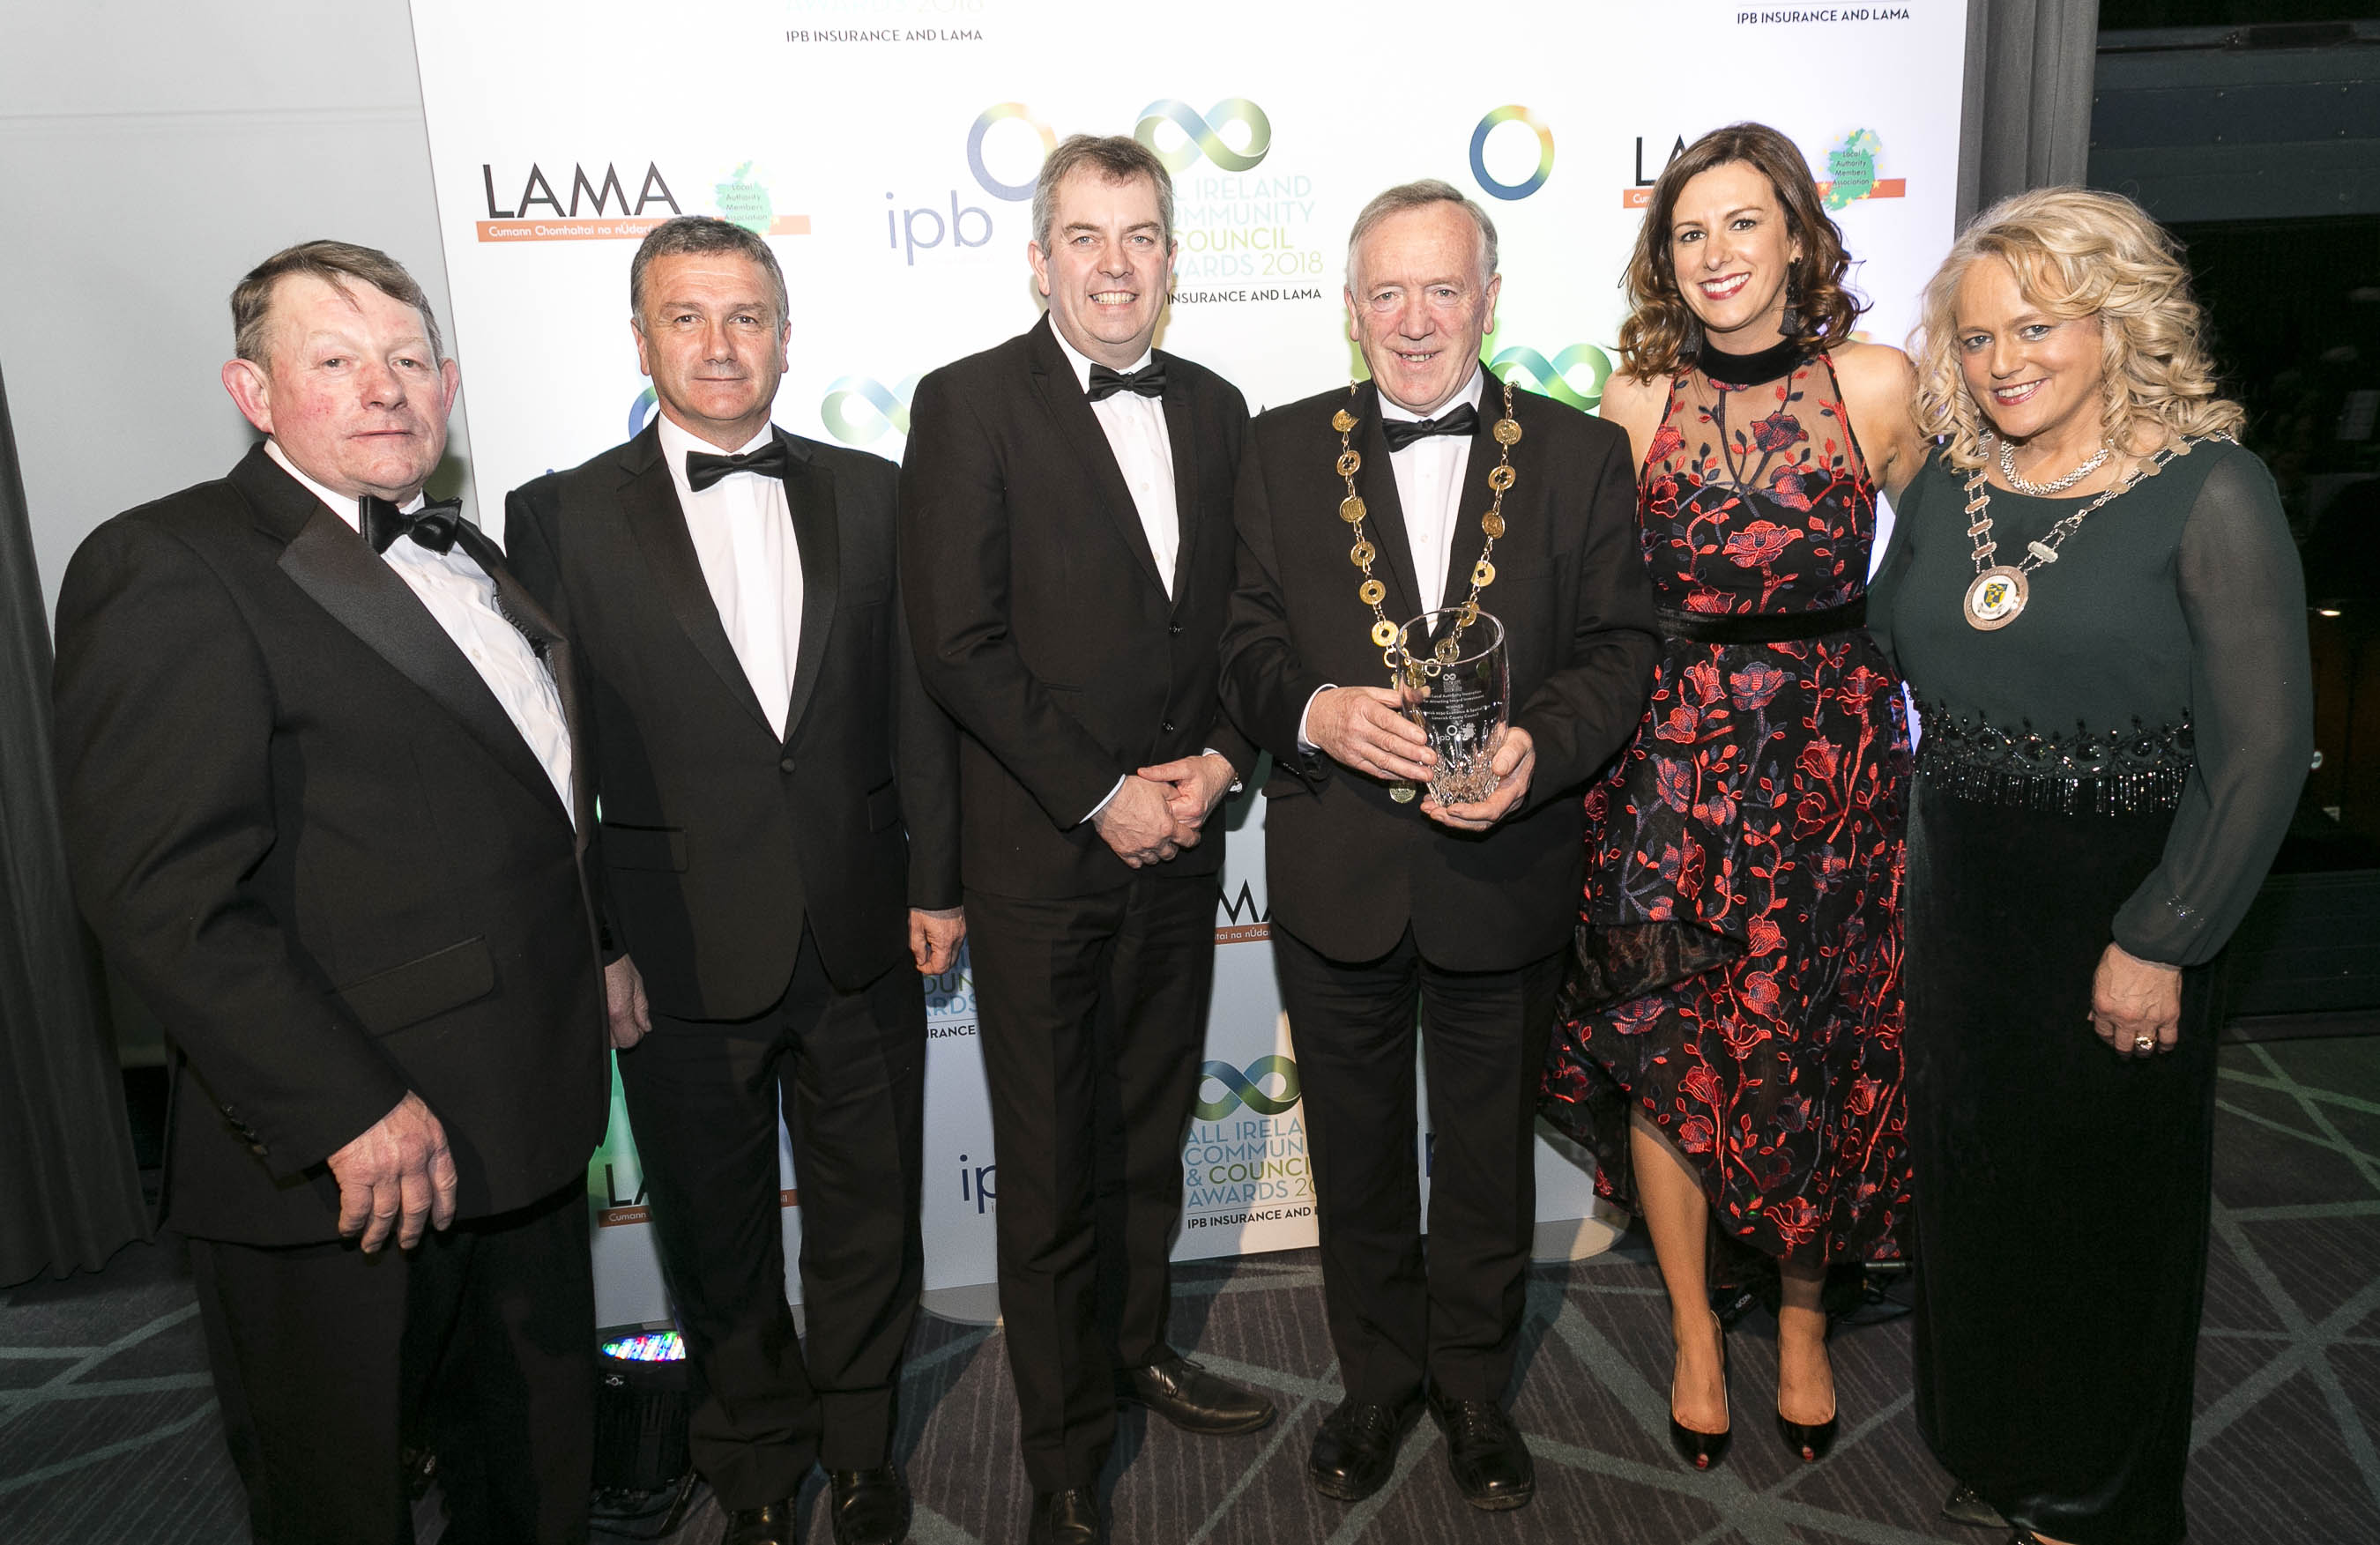 All Ireland Community Council Awards 2018